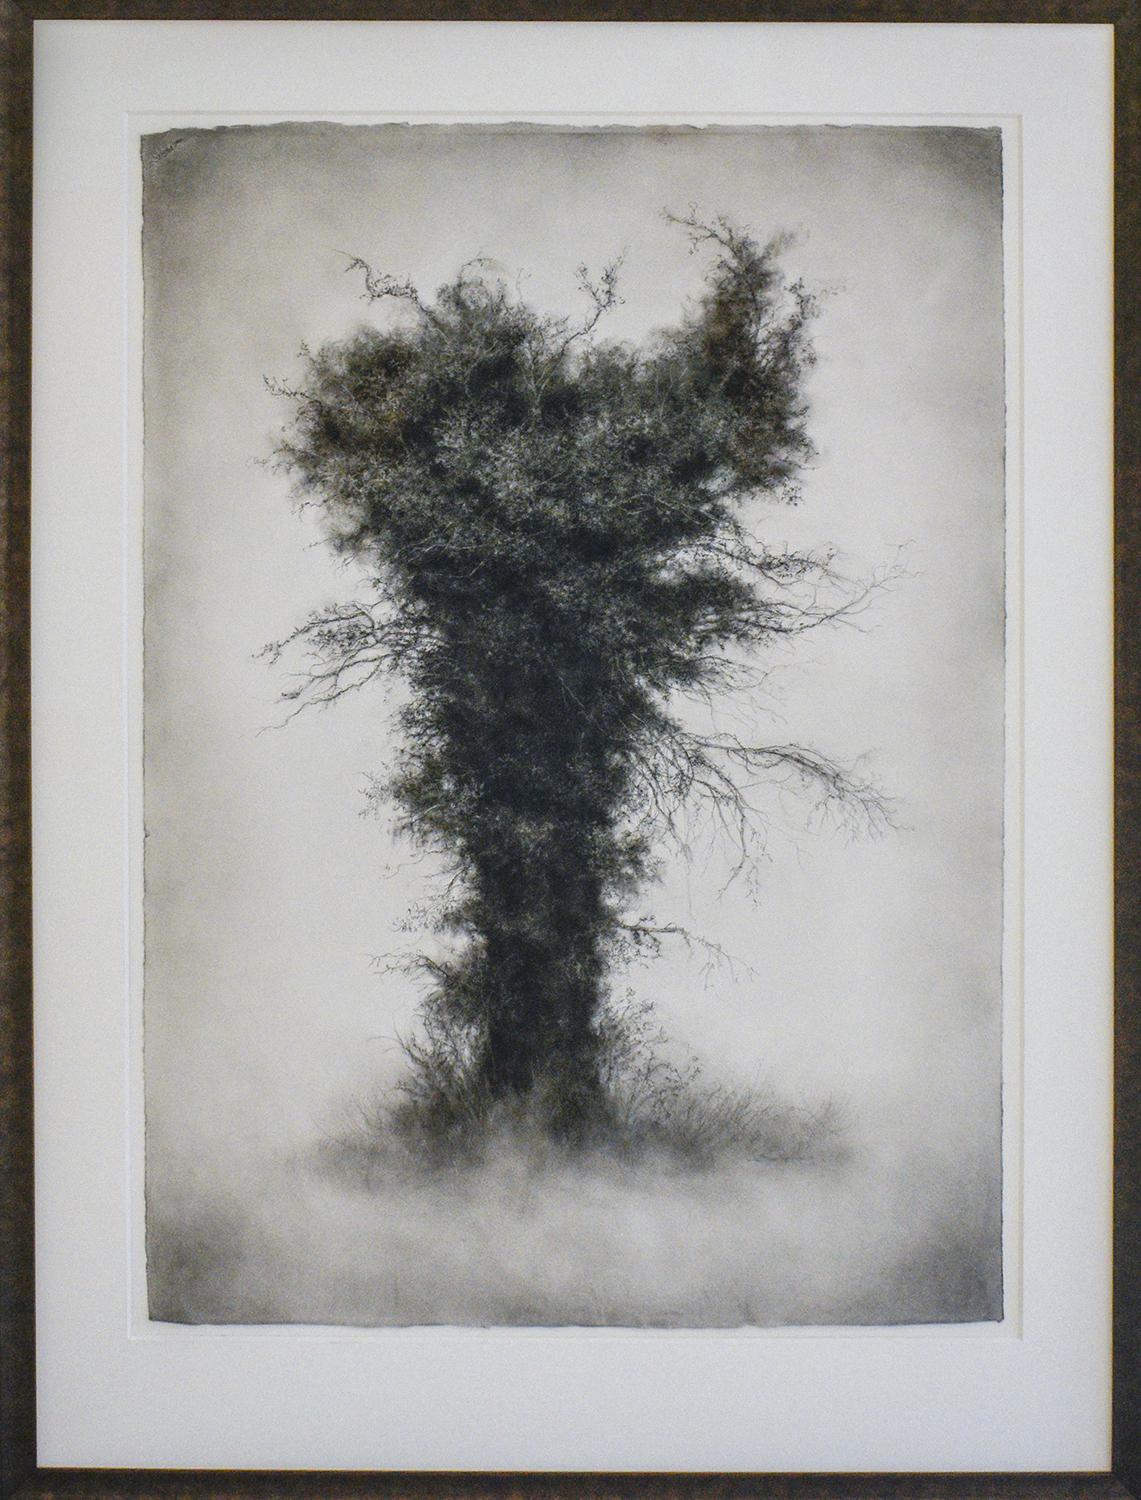 Wallflower (Moody Charcoal Landscape Drawing of Tree) - Art by Sue Bryan